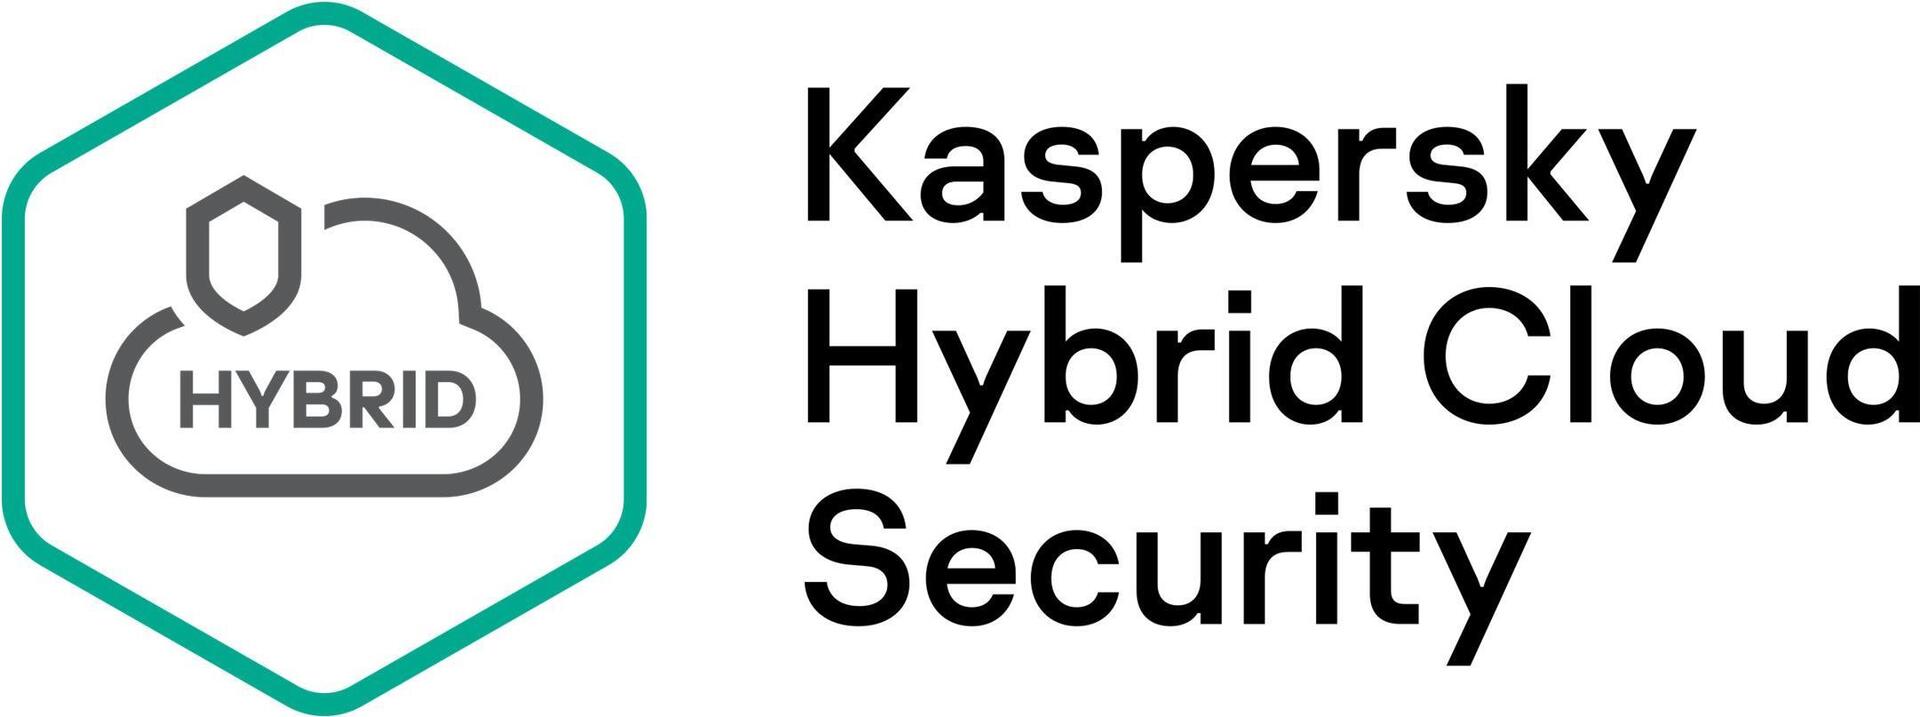 KASPERSKY Hybrid Cloud Security Enterprise CPU European Edition 4 - CPU 1 year Base Plus License (KL4553XADF8)